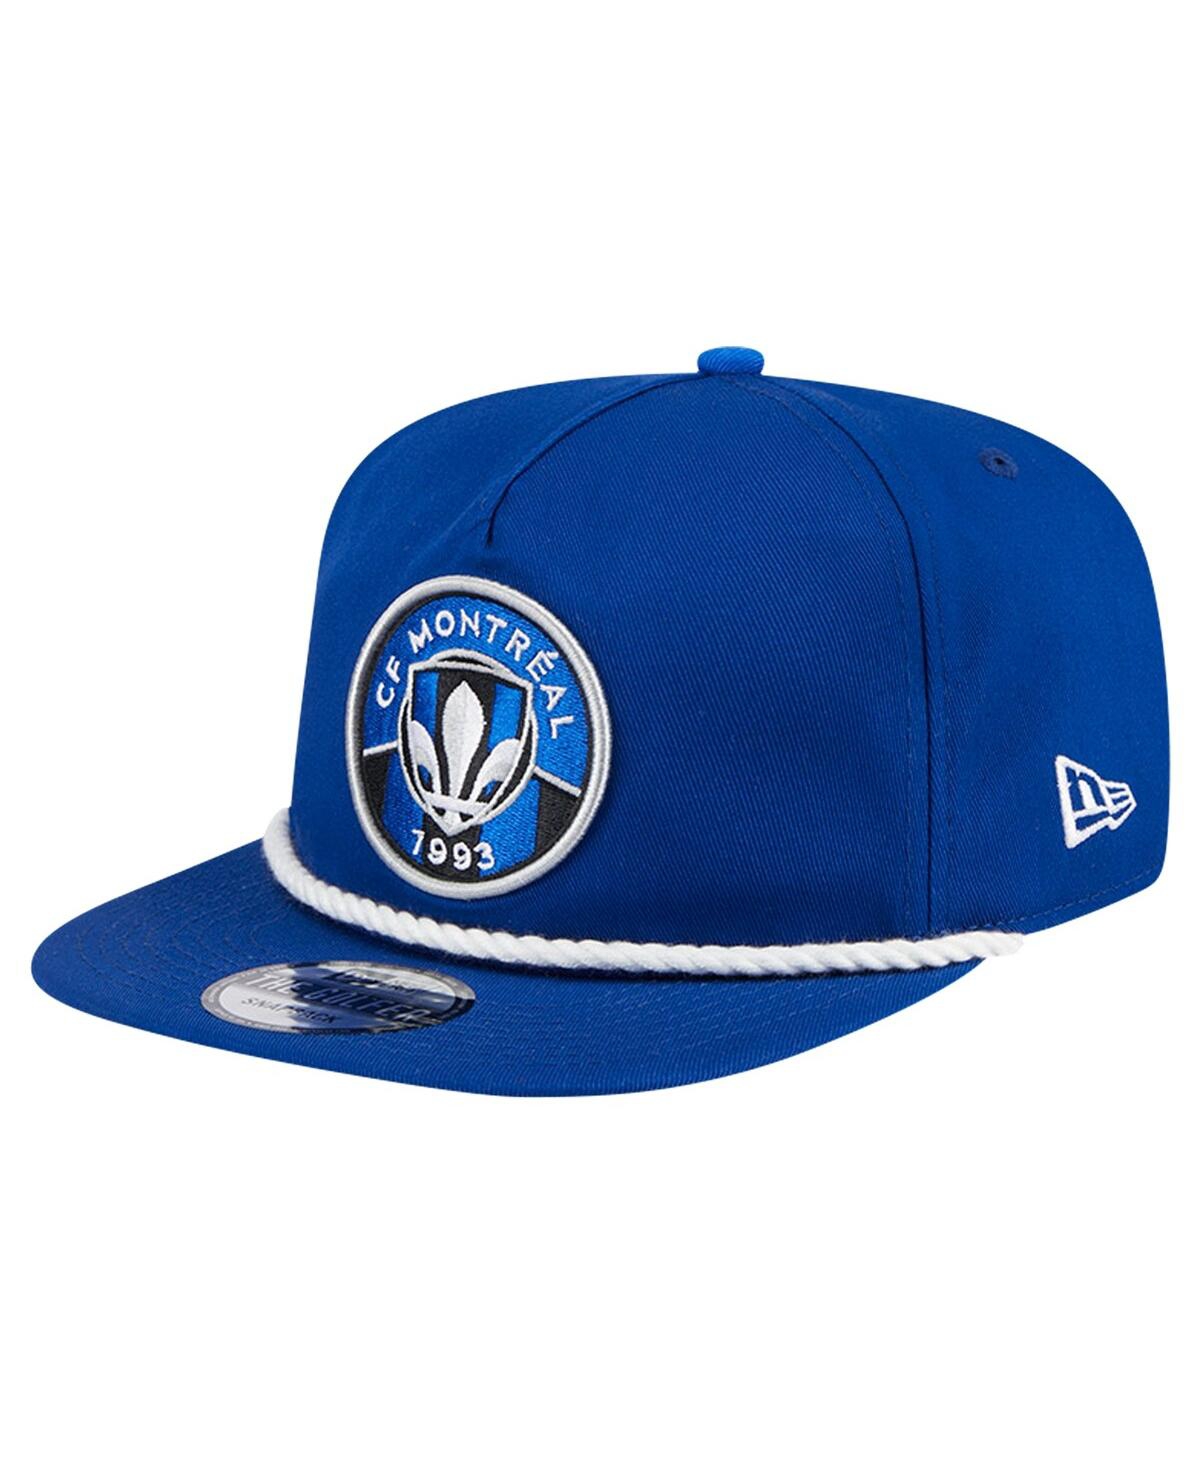 Shop New Era Men's  Blue Cf Montreal The Golfer Kickoff Collection Adjustable Hat